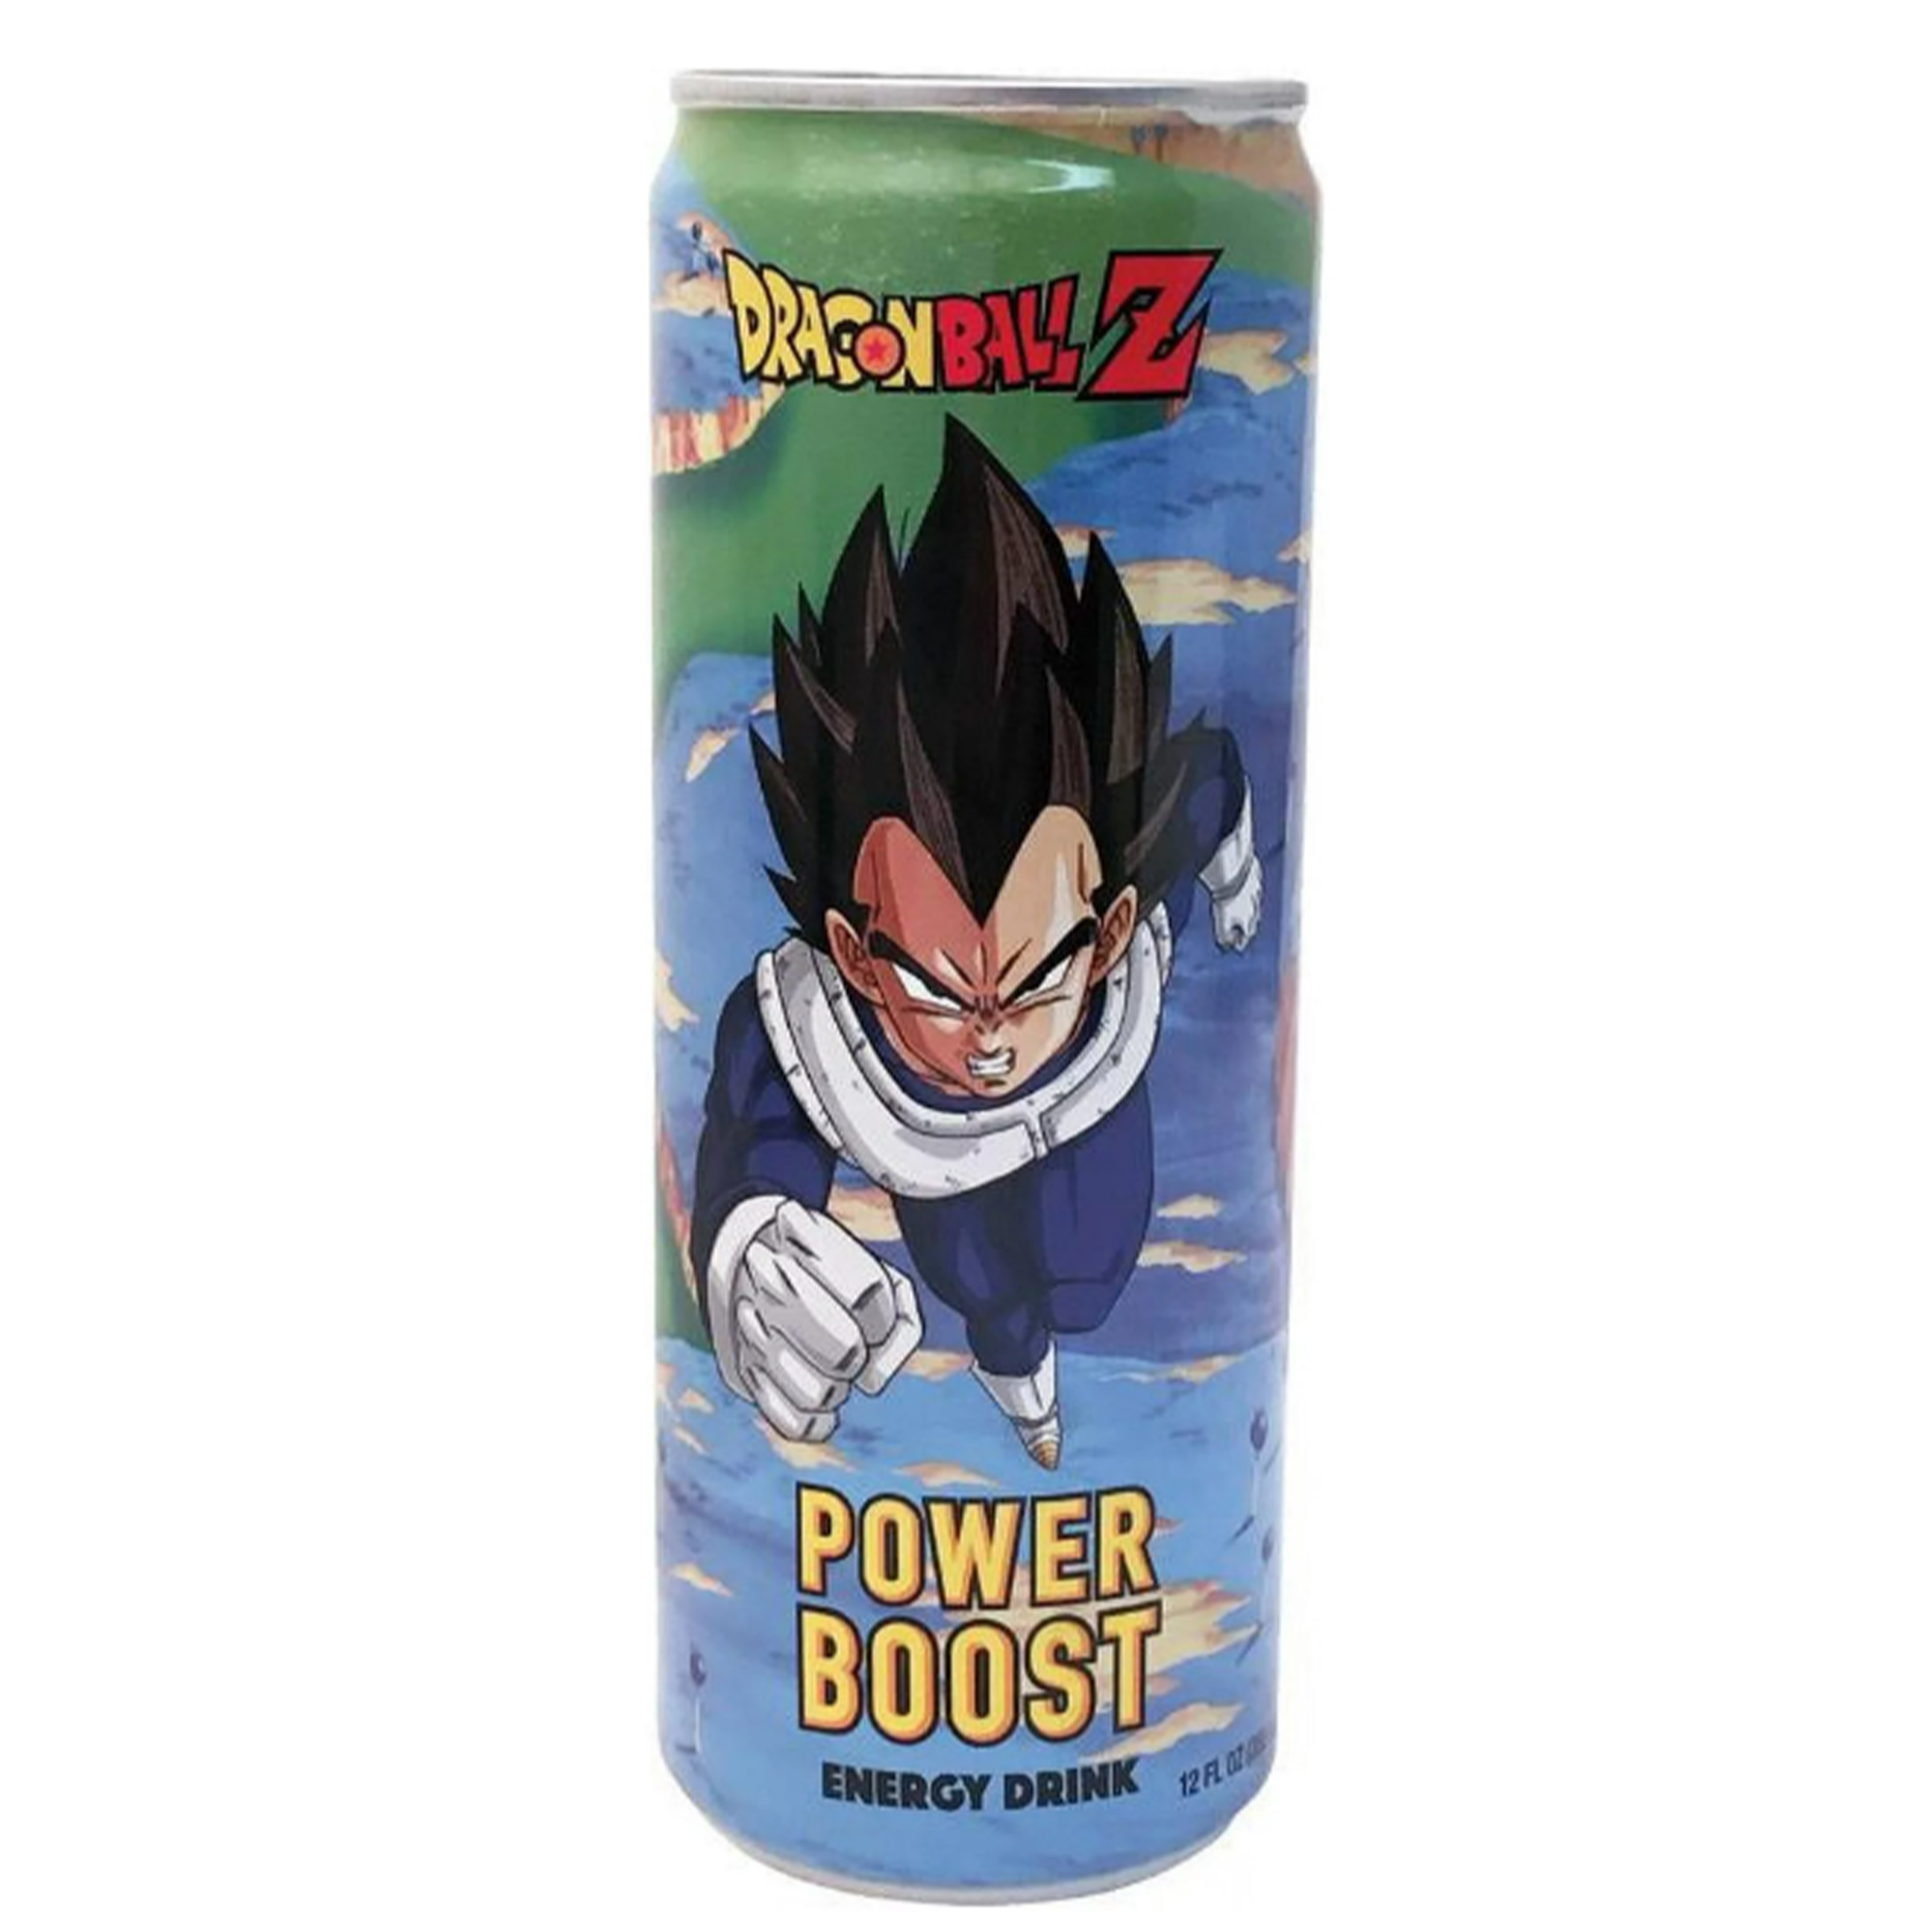 Boston America Dragon Ball Z Power Boost Energy Drink